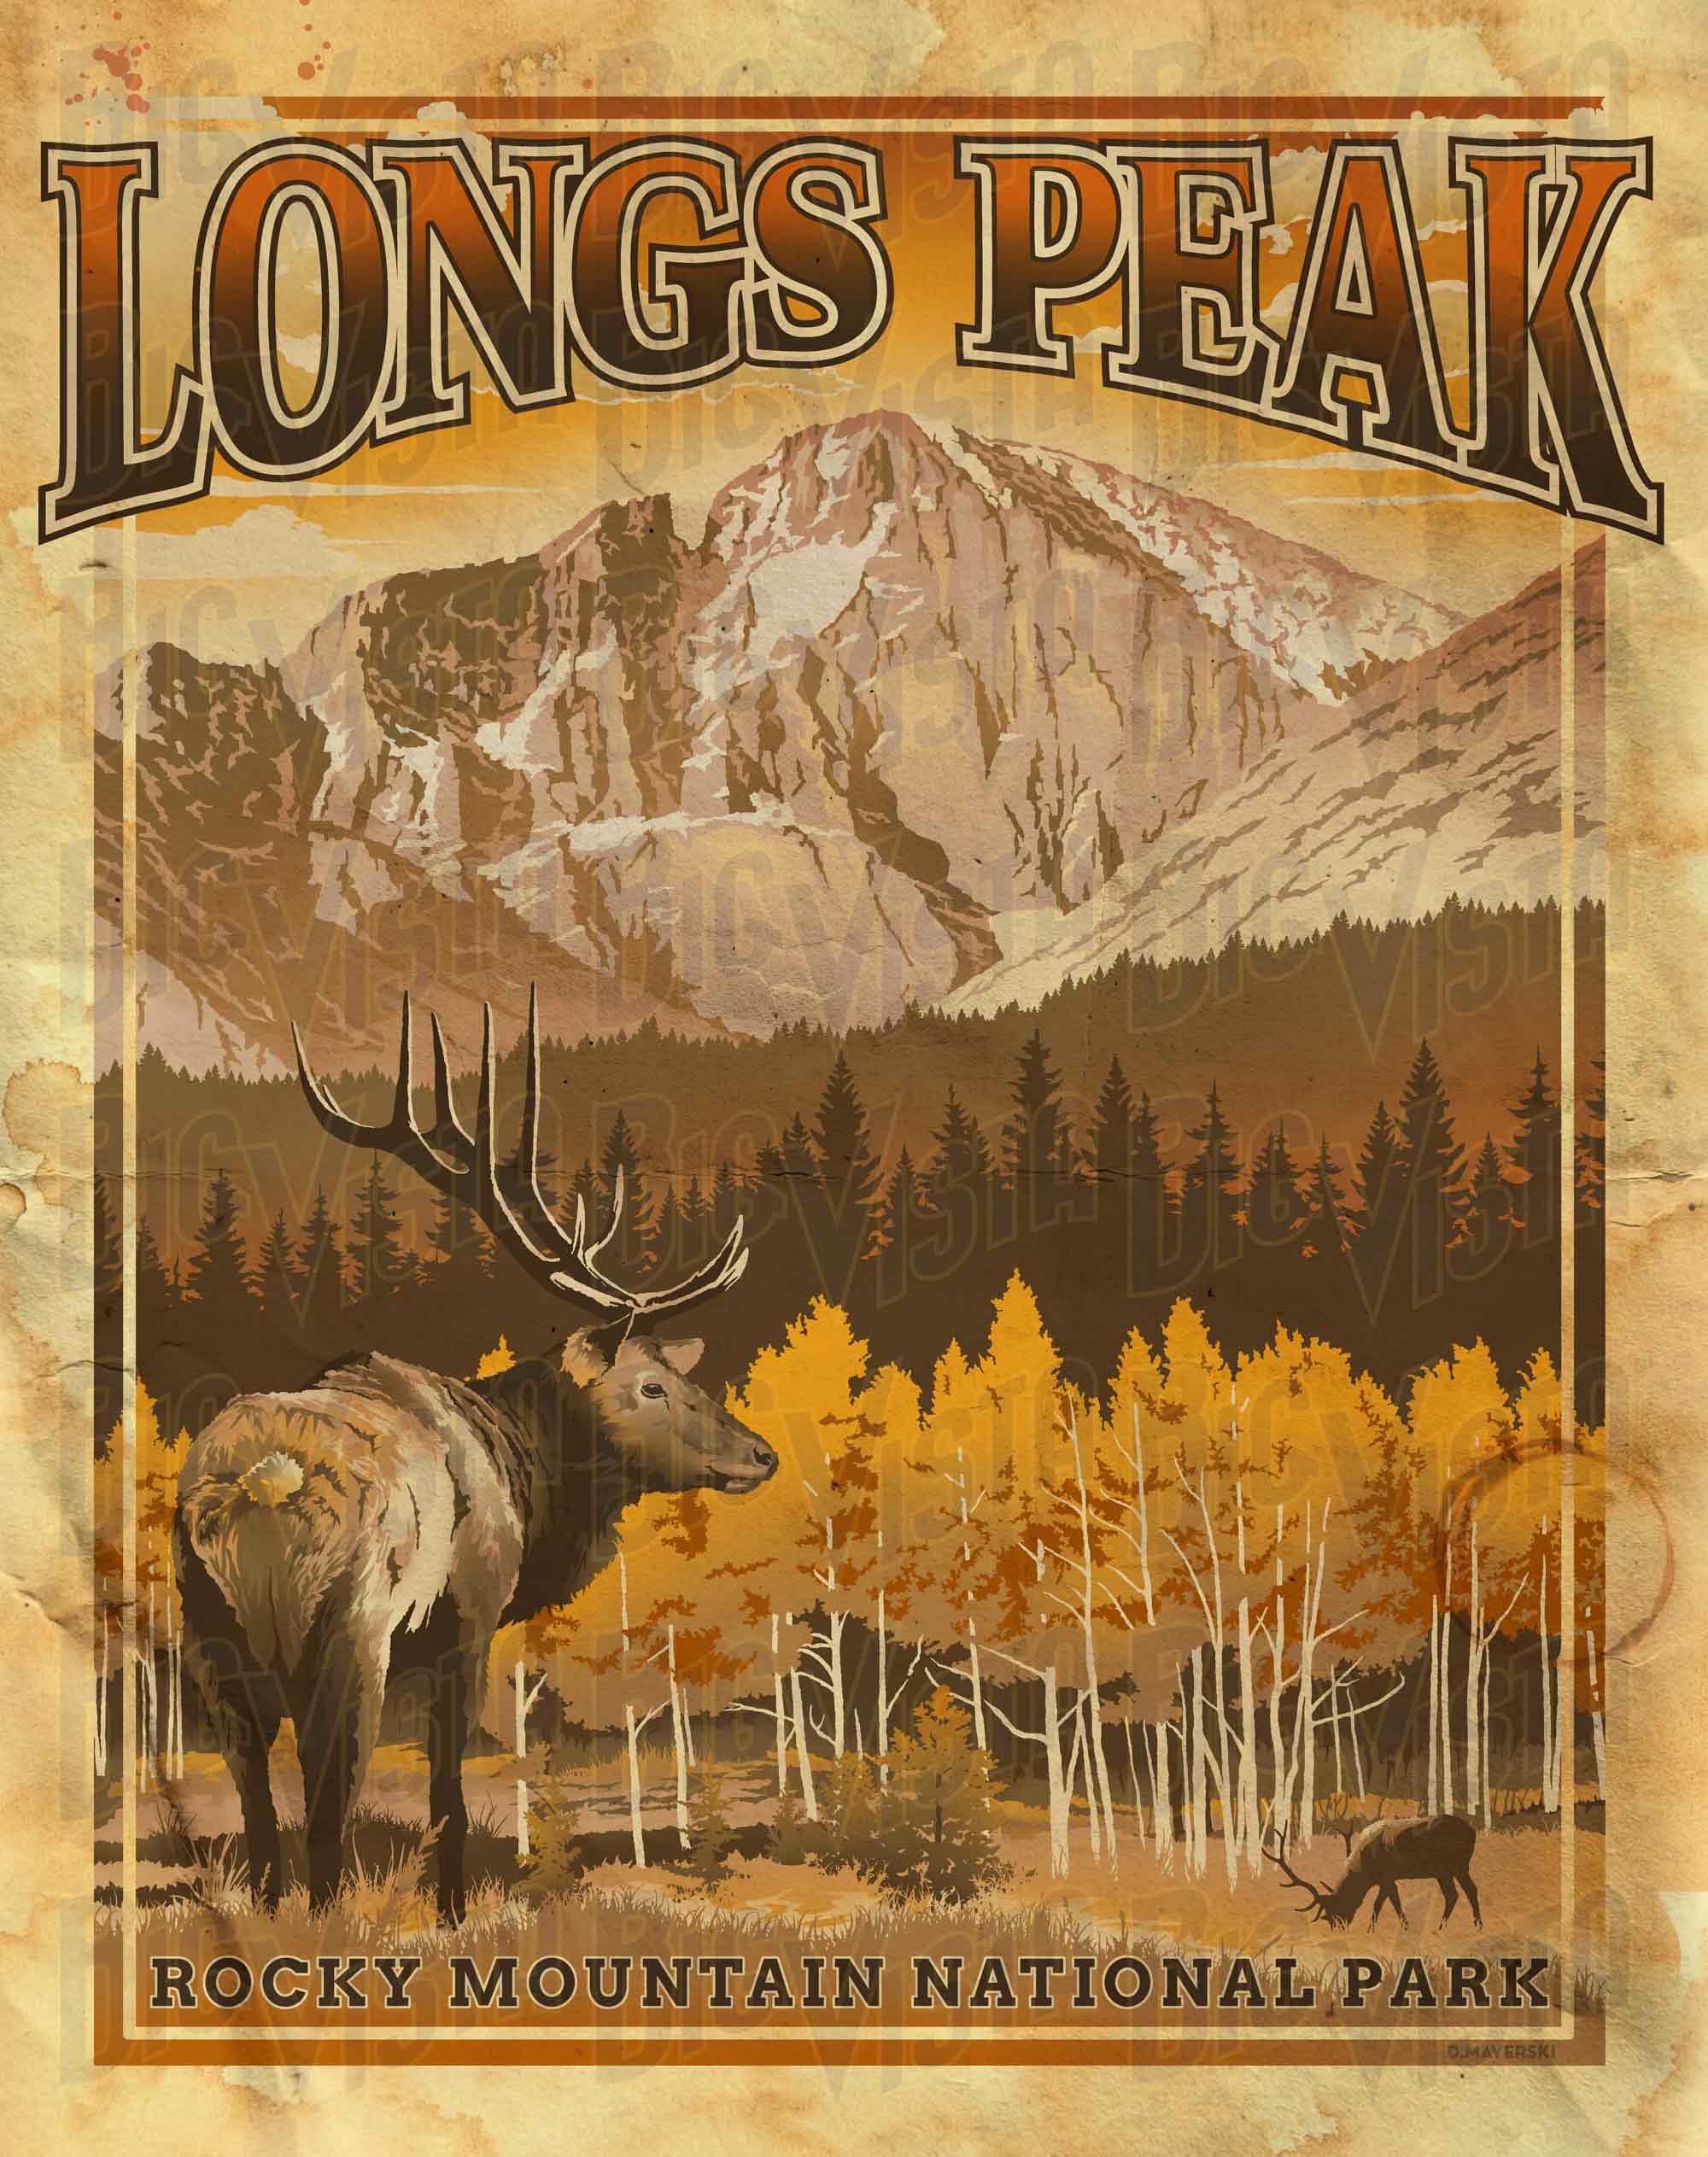 Longs Peak poster